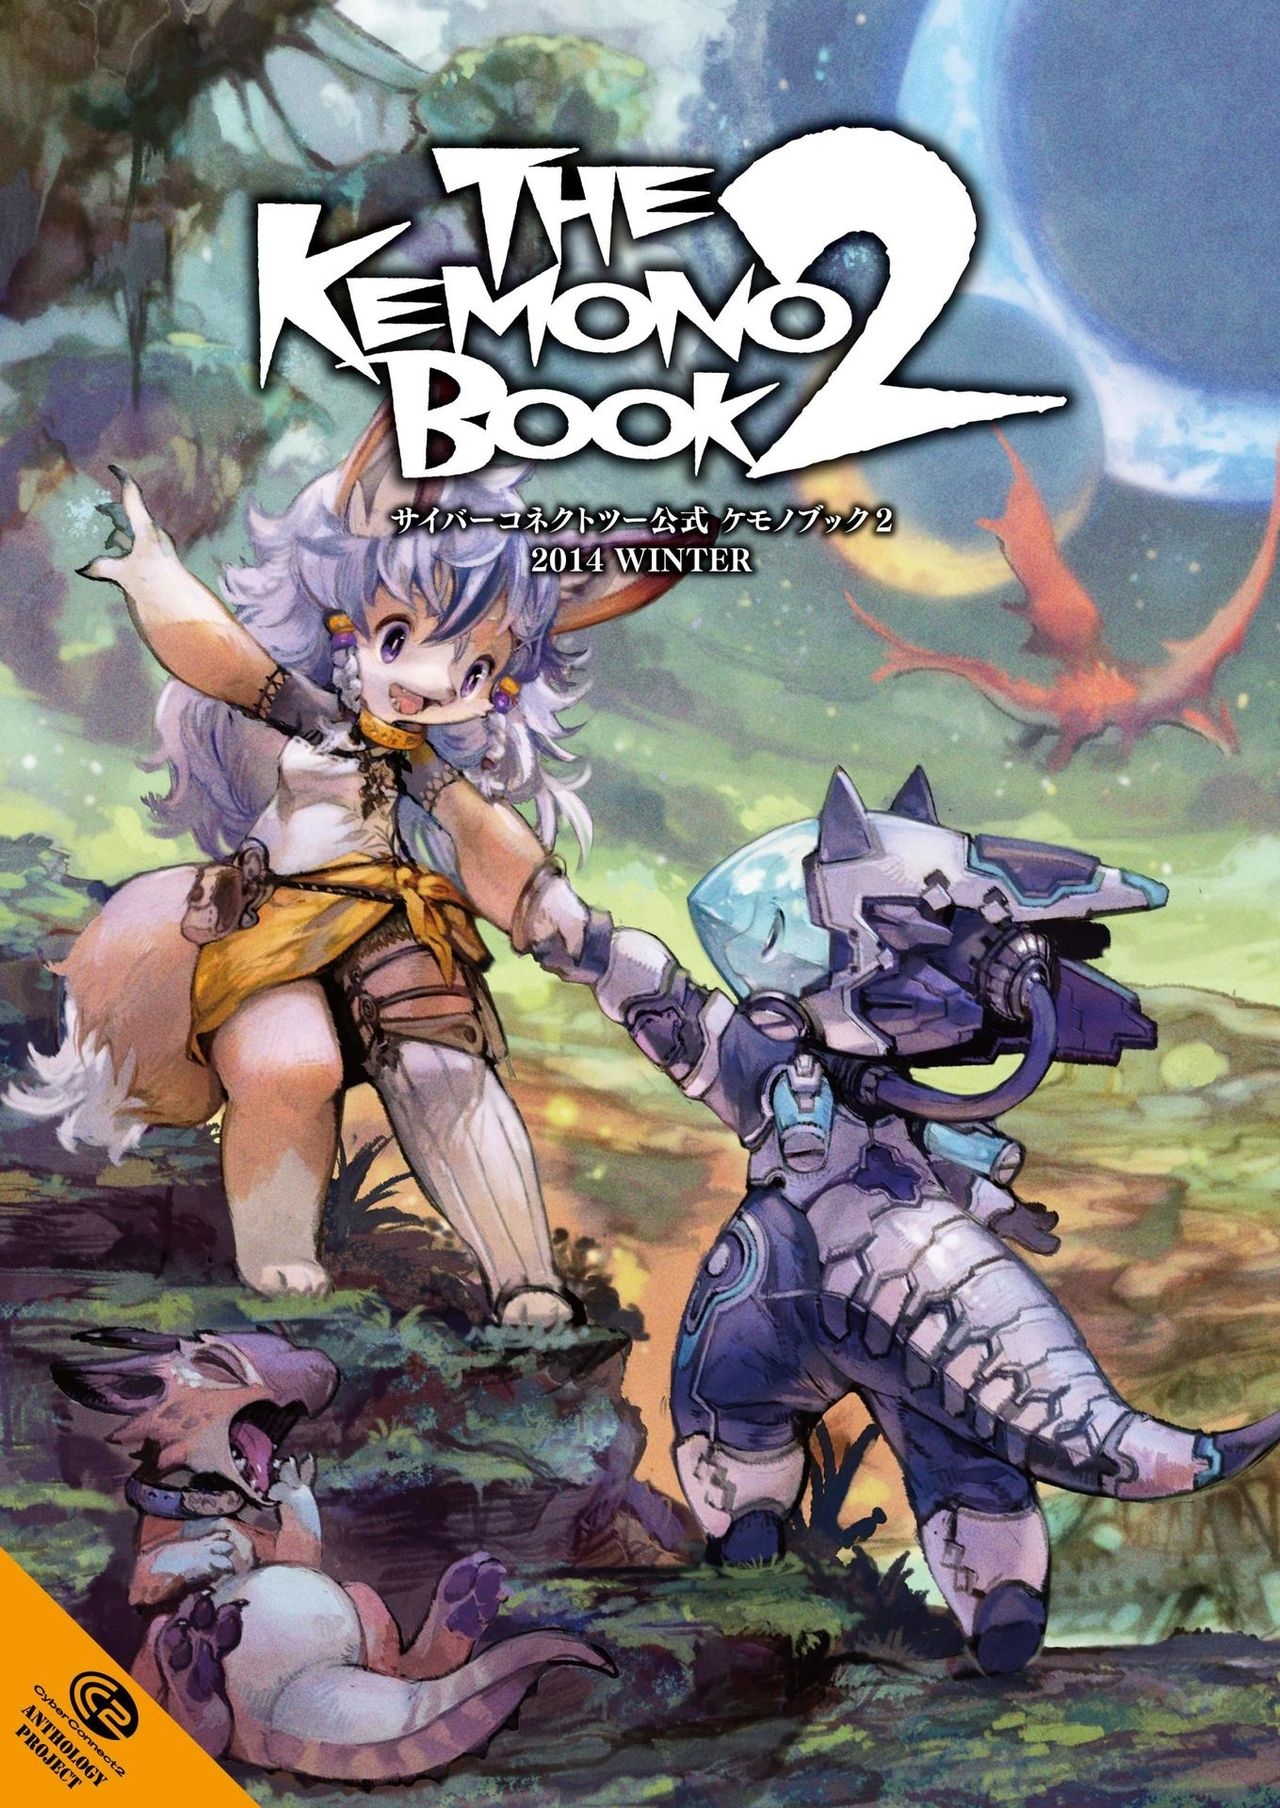 The Kemono Book 2 0